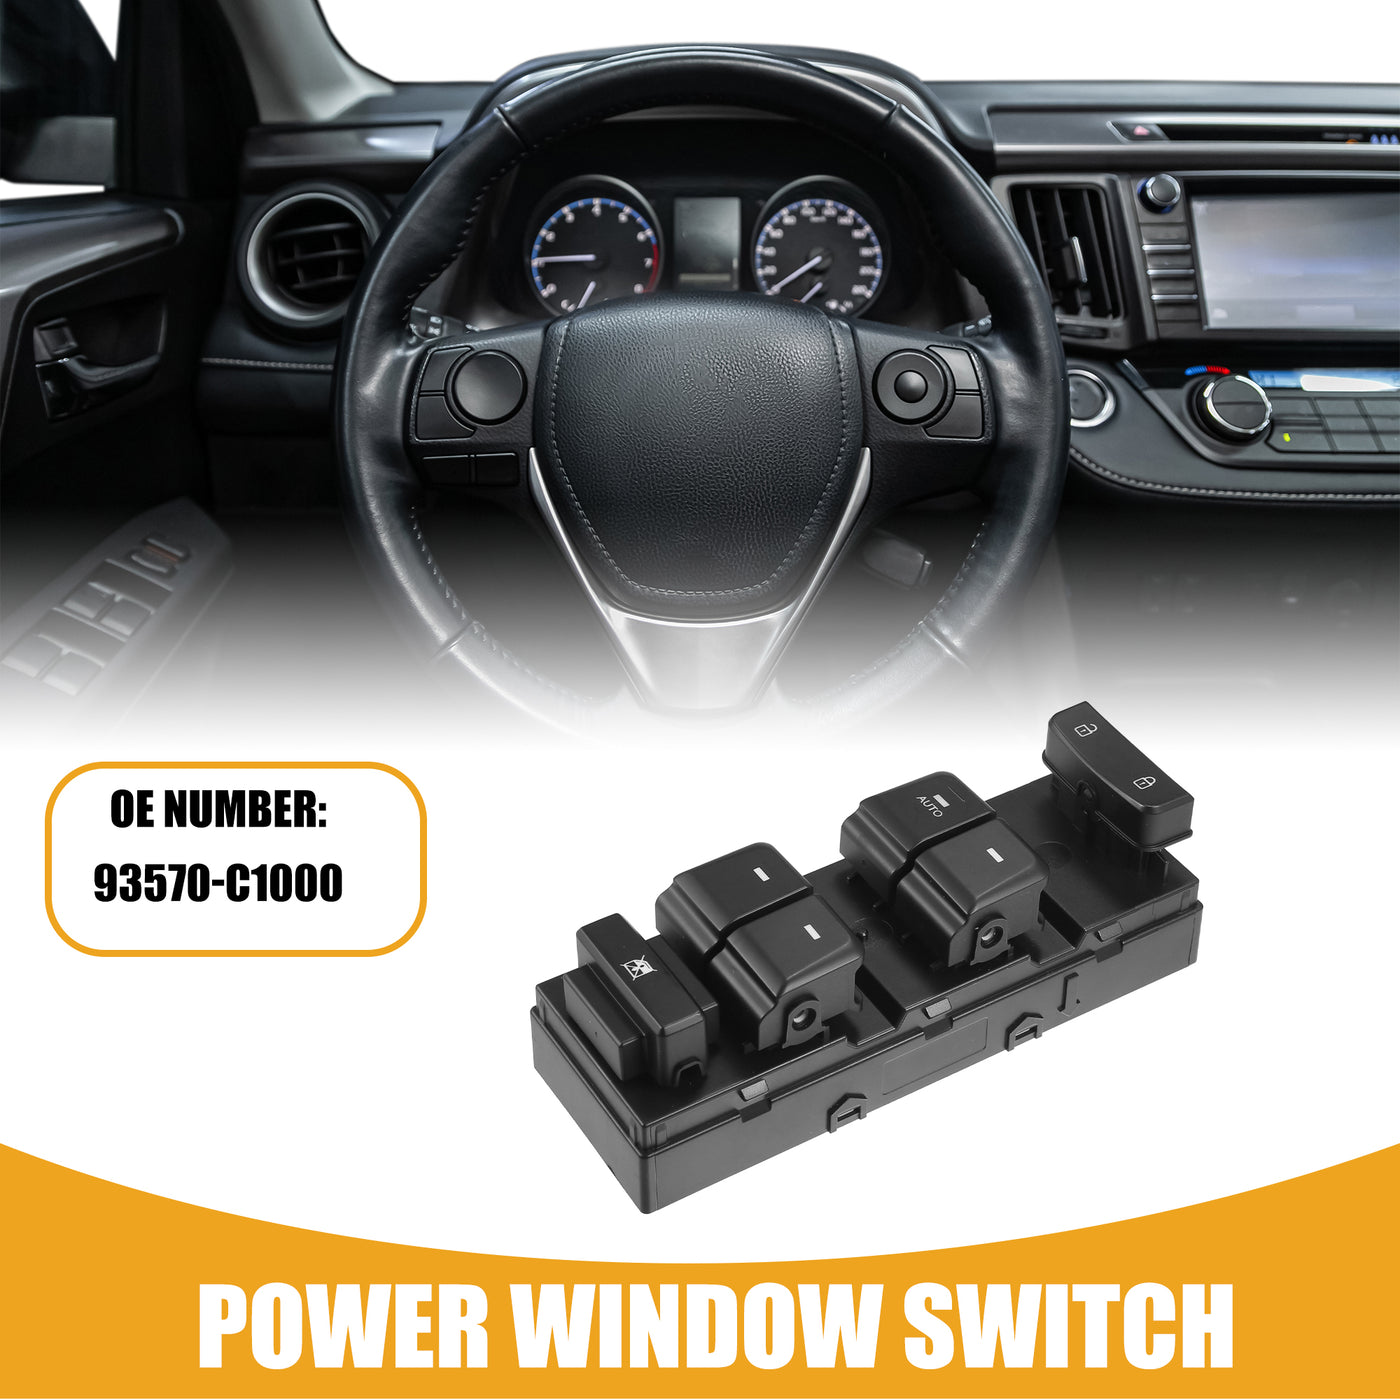 Partuto Power Window Main Switch No.93570-C1000 - Car - Driver Door Left Door Window Main Switch Control - for Hyundai Sonata 2015-2019 - Plastic Black - 1Pc